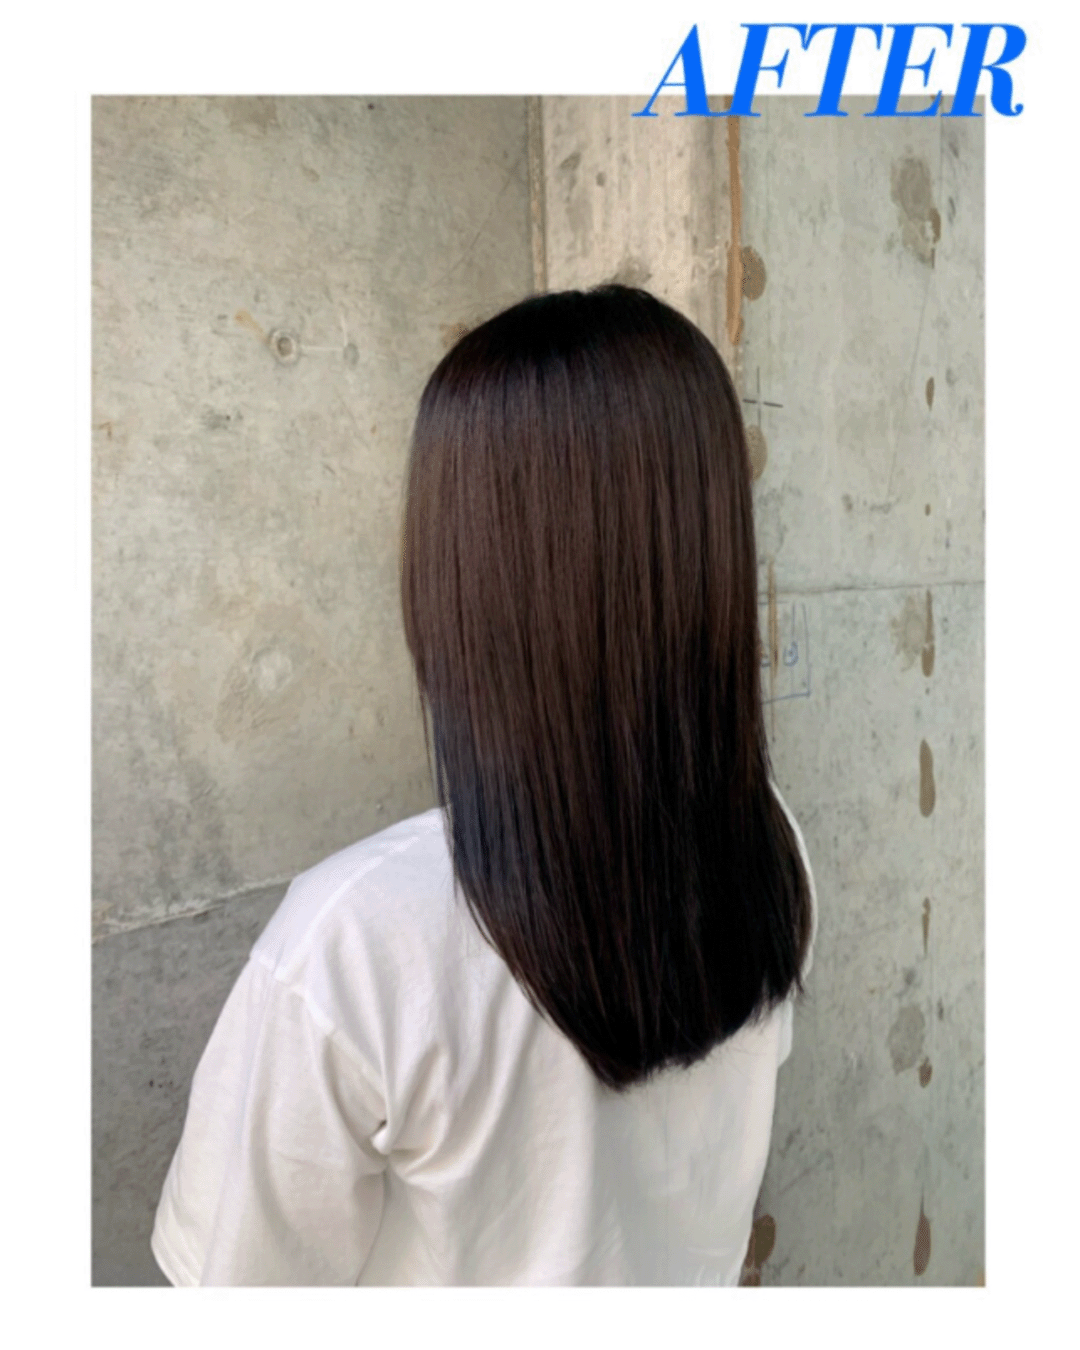 USFIN ATELIER produced by assort | Hair Salon